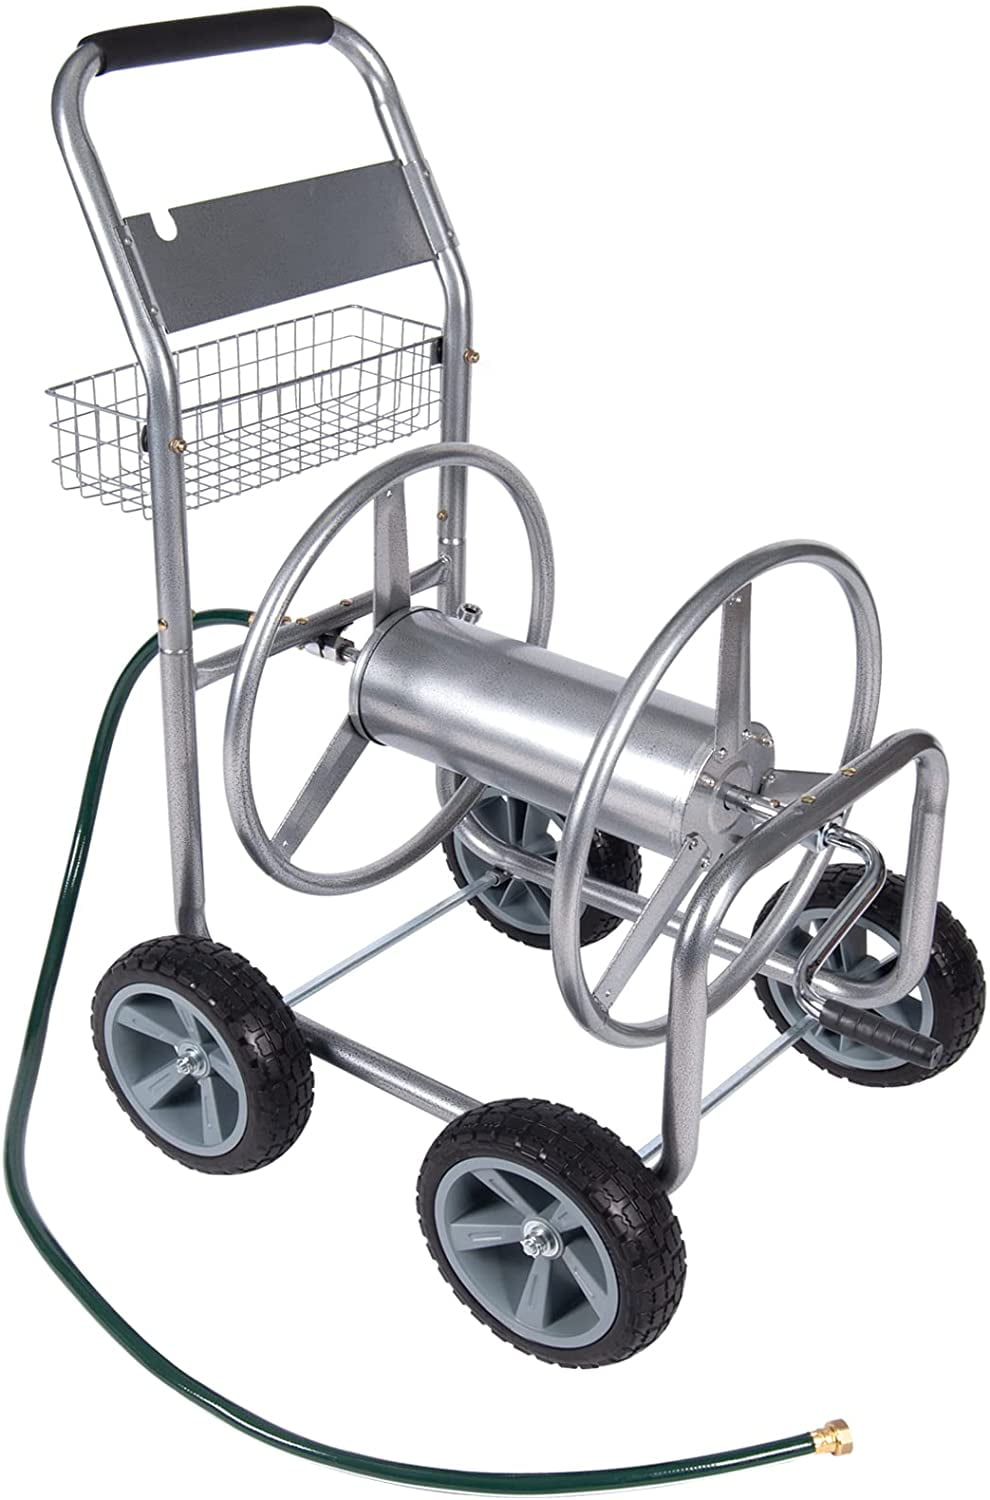 KAMMQI Hose Reel Cart - Portable Garden Hose Reel Cart Outdoor Water Hose  Reel with Wheels, Holds 98 Feet of 3/4 inch, and 131Feet of 5/8 inch Hose  with Hose Ad…